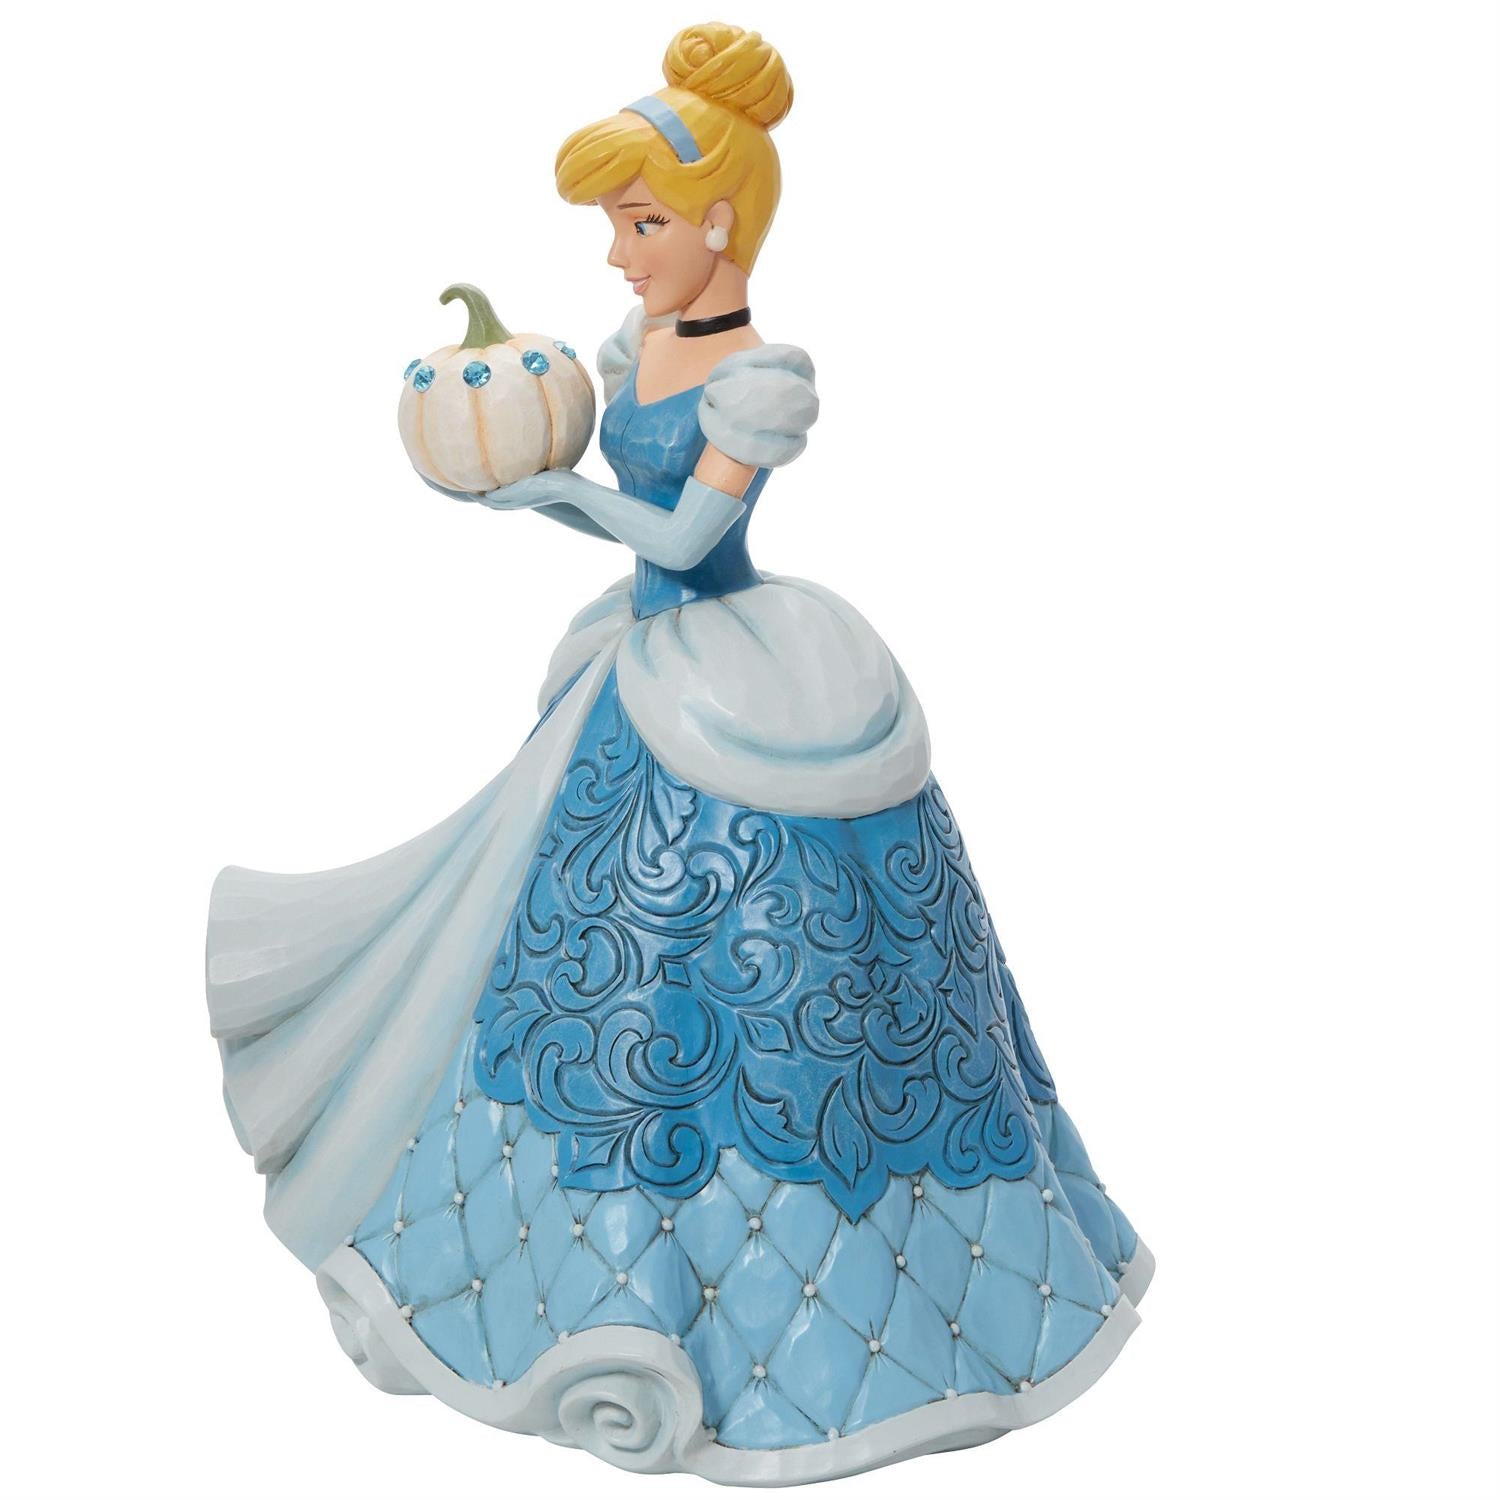 Cinderella holding a pumpkin - side view